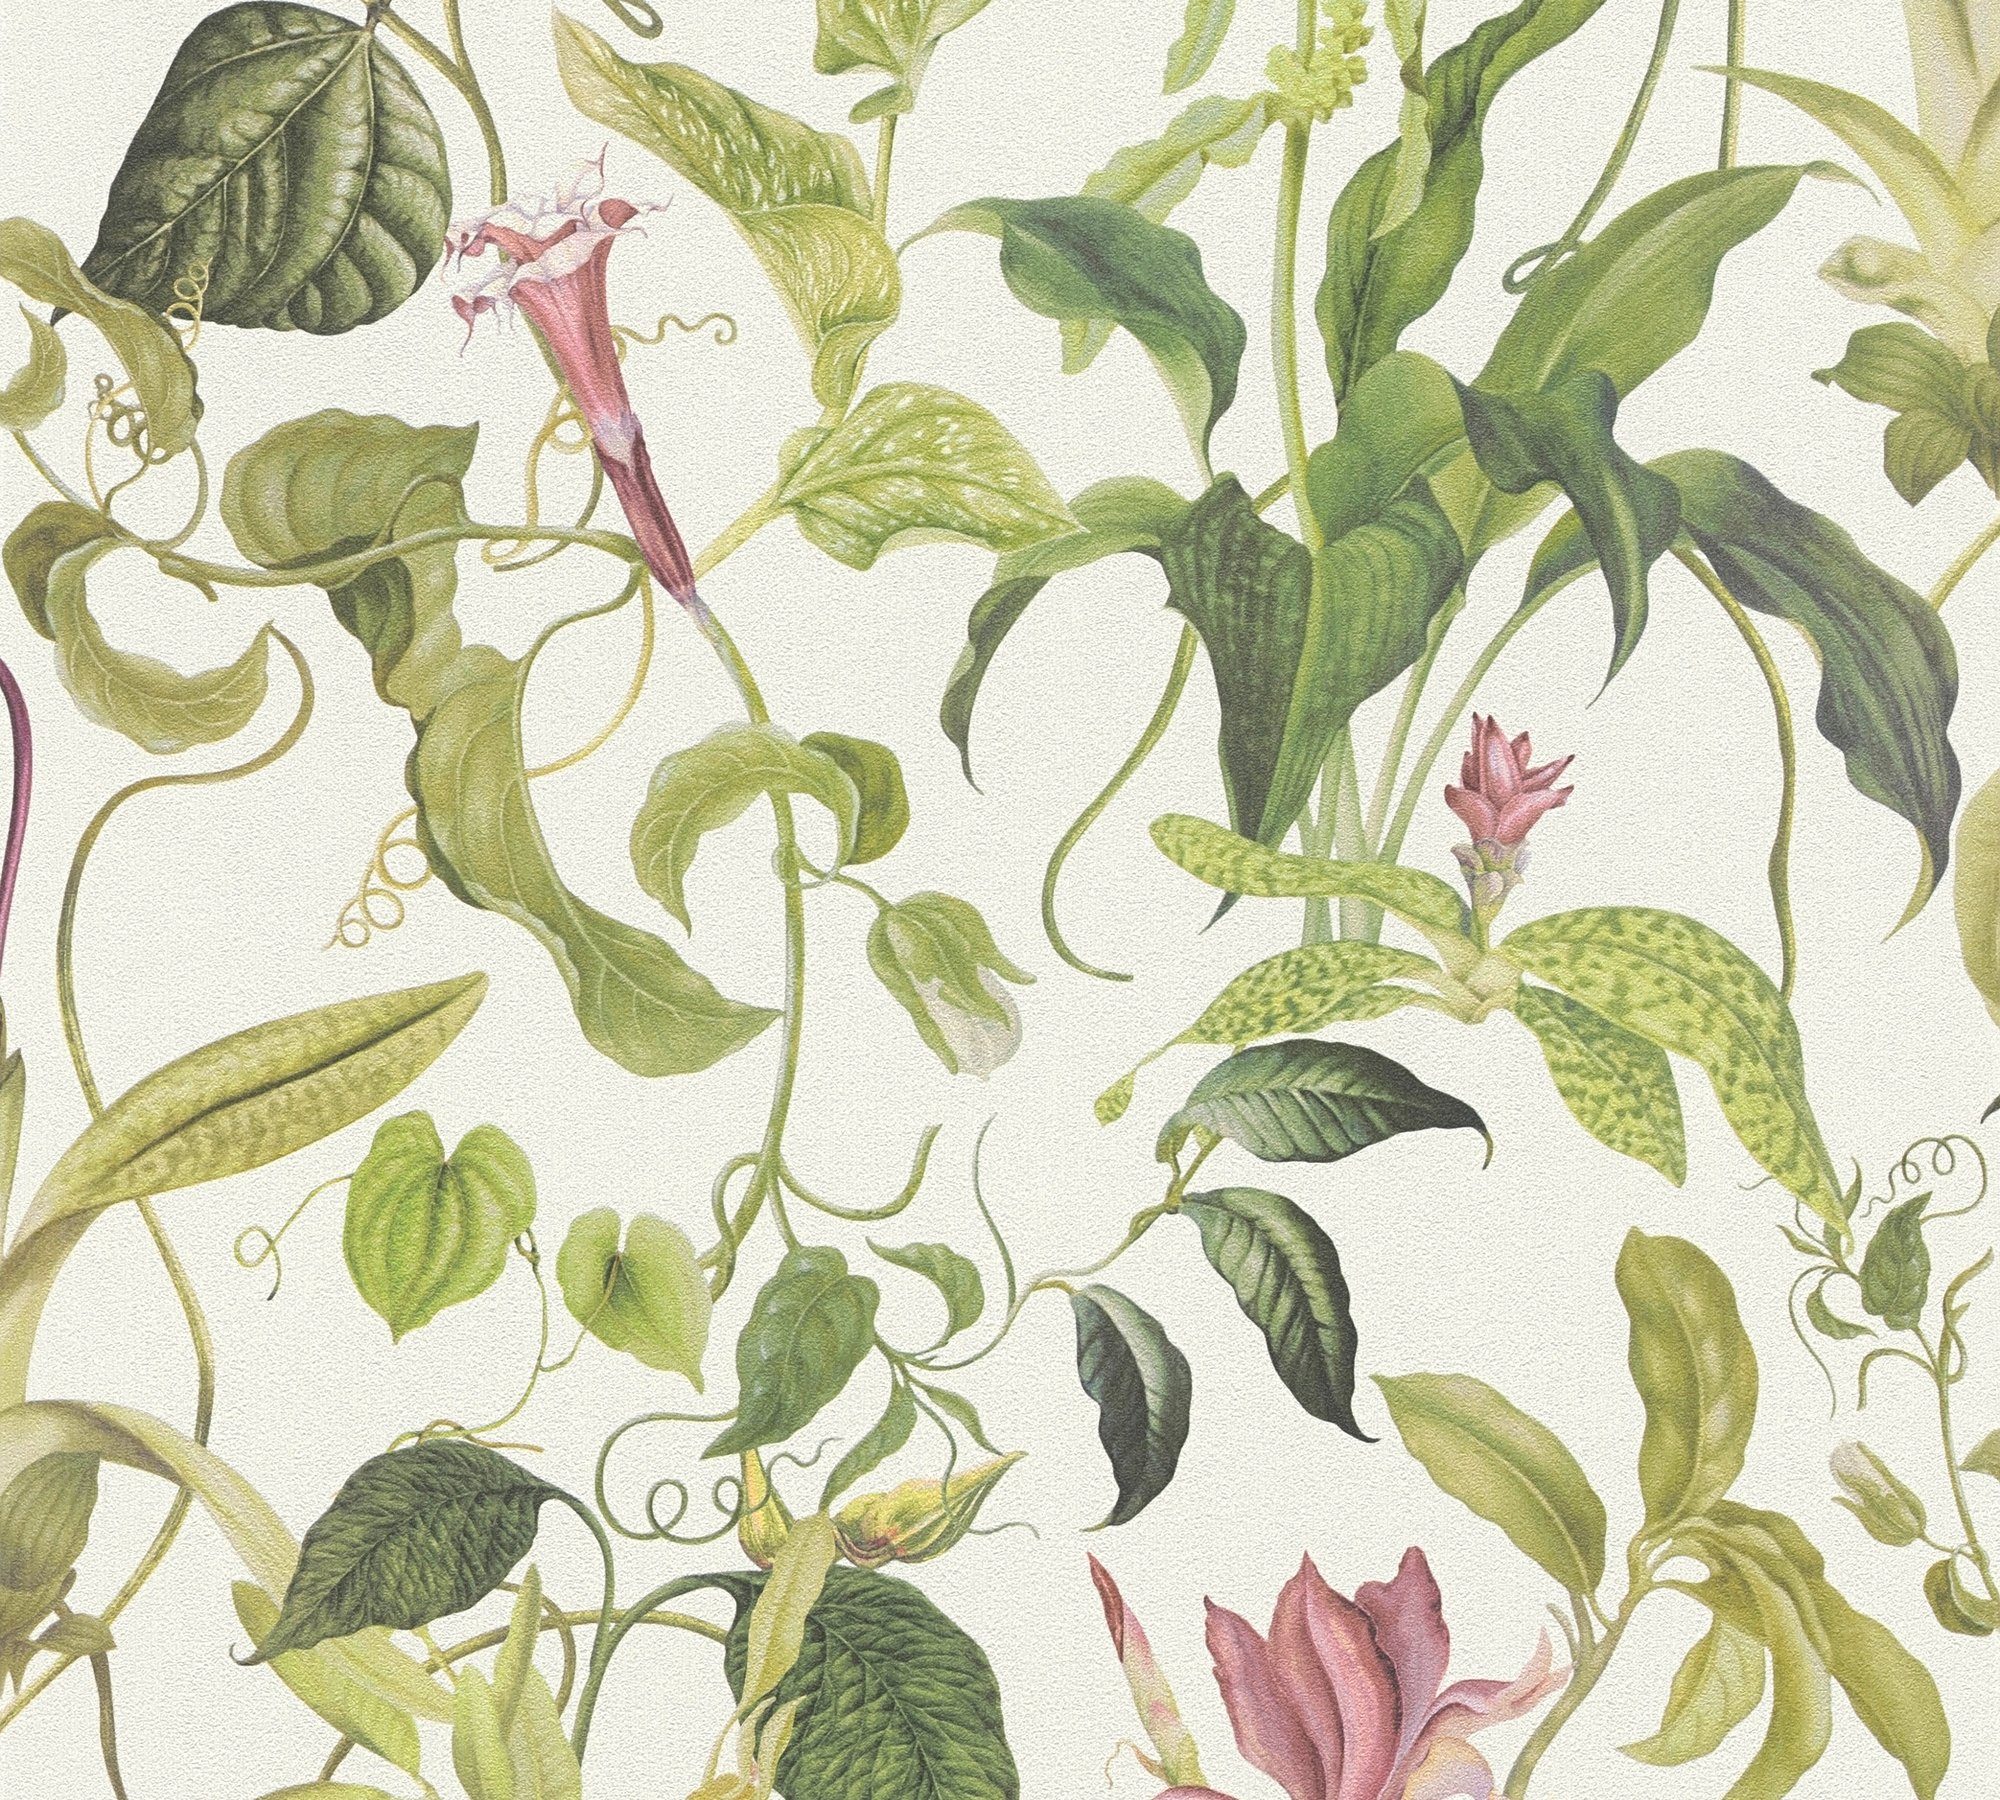 is Création Tapete tropisch, creme/grün/rosa Designertapete METROPOLIS floral, LIVING A.S. botanisch, MICHALSKY Vliestapete BY Change good, Dschungel